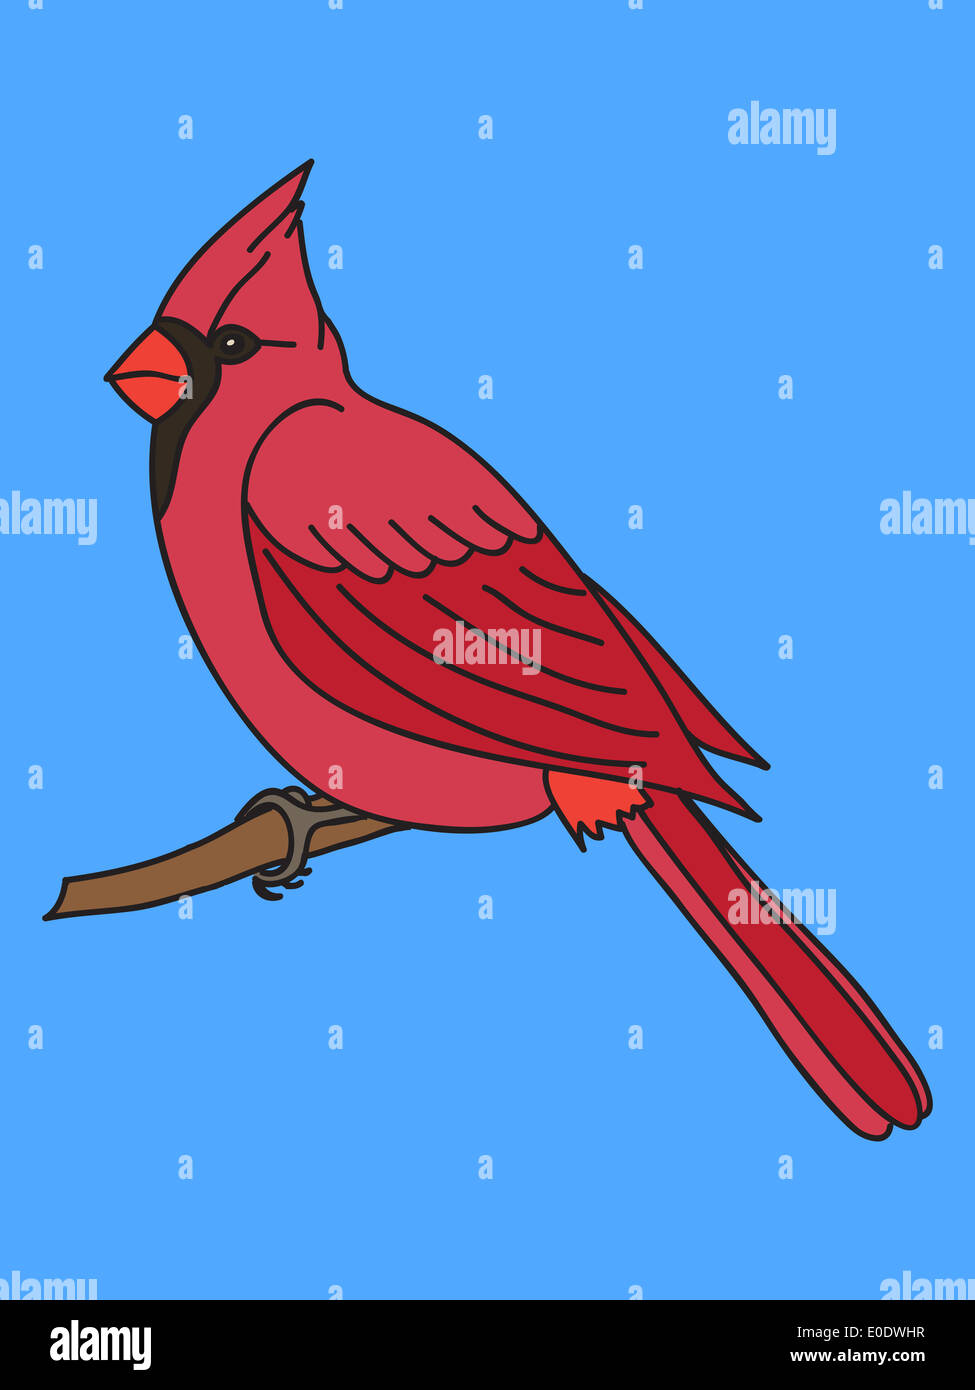 Northern cardinal bird illustration Stock Photo